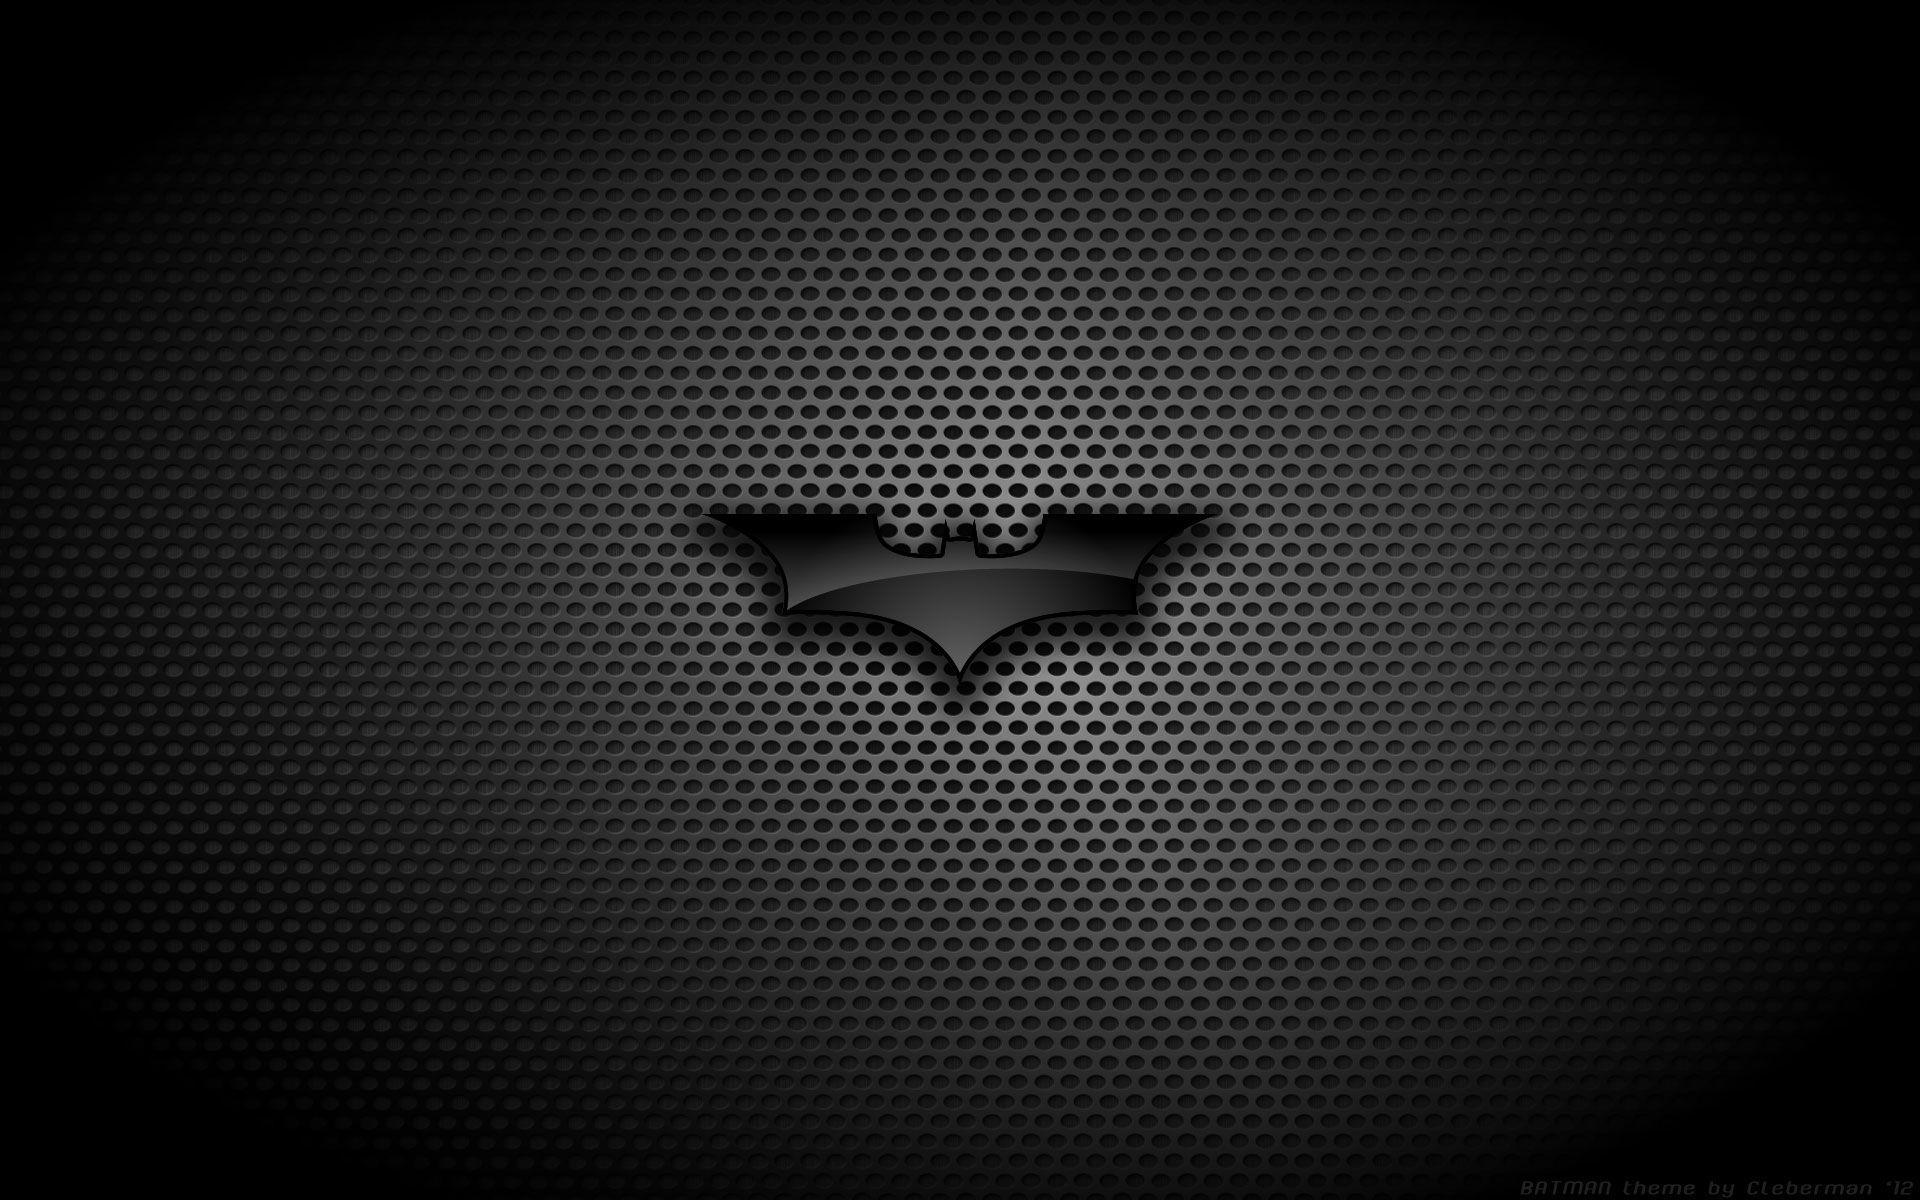 Batman Logo Wallpapers Android - Wallpaper Cave